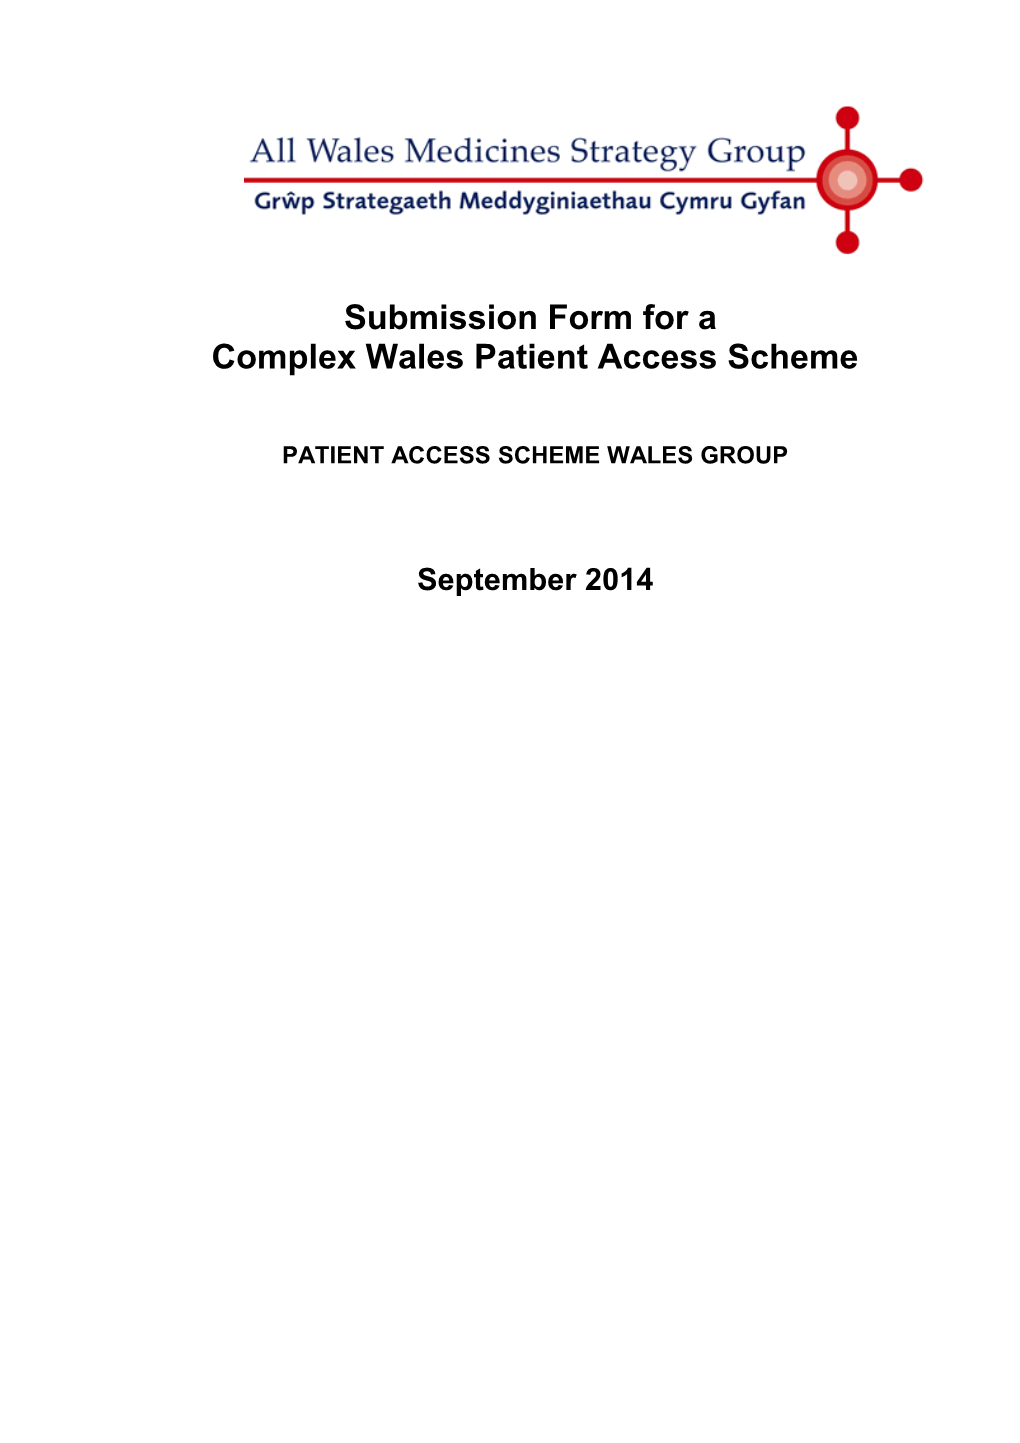 Submission Form for a Complex Wales Patient Access Scheme